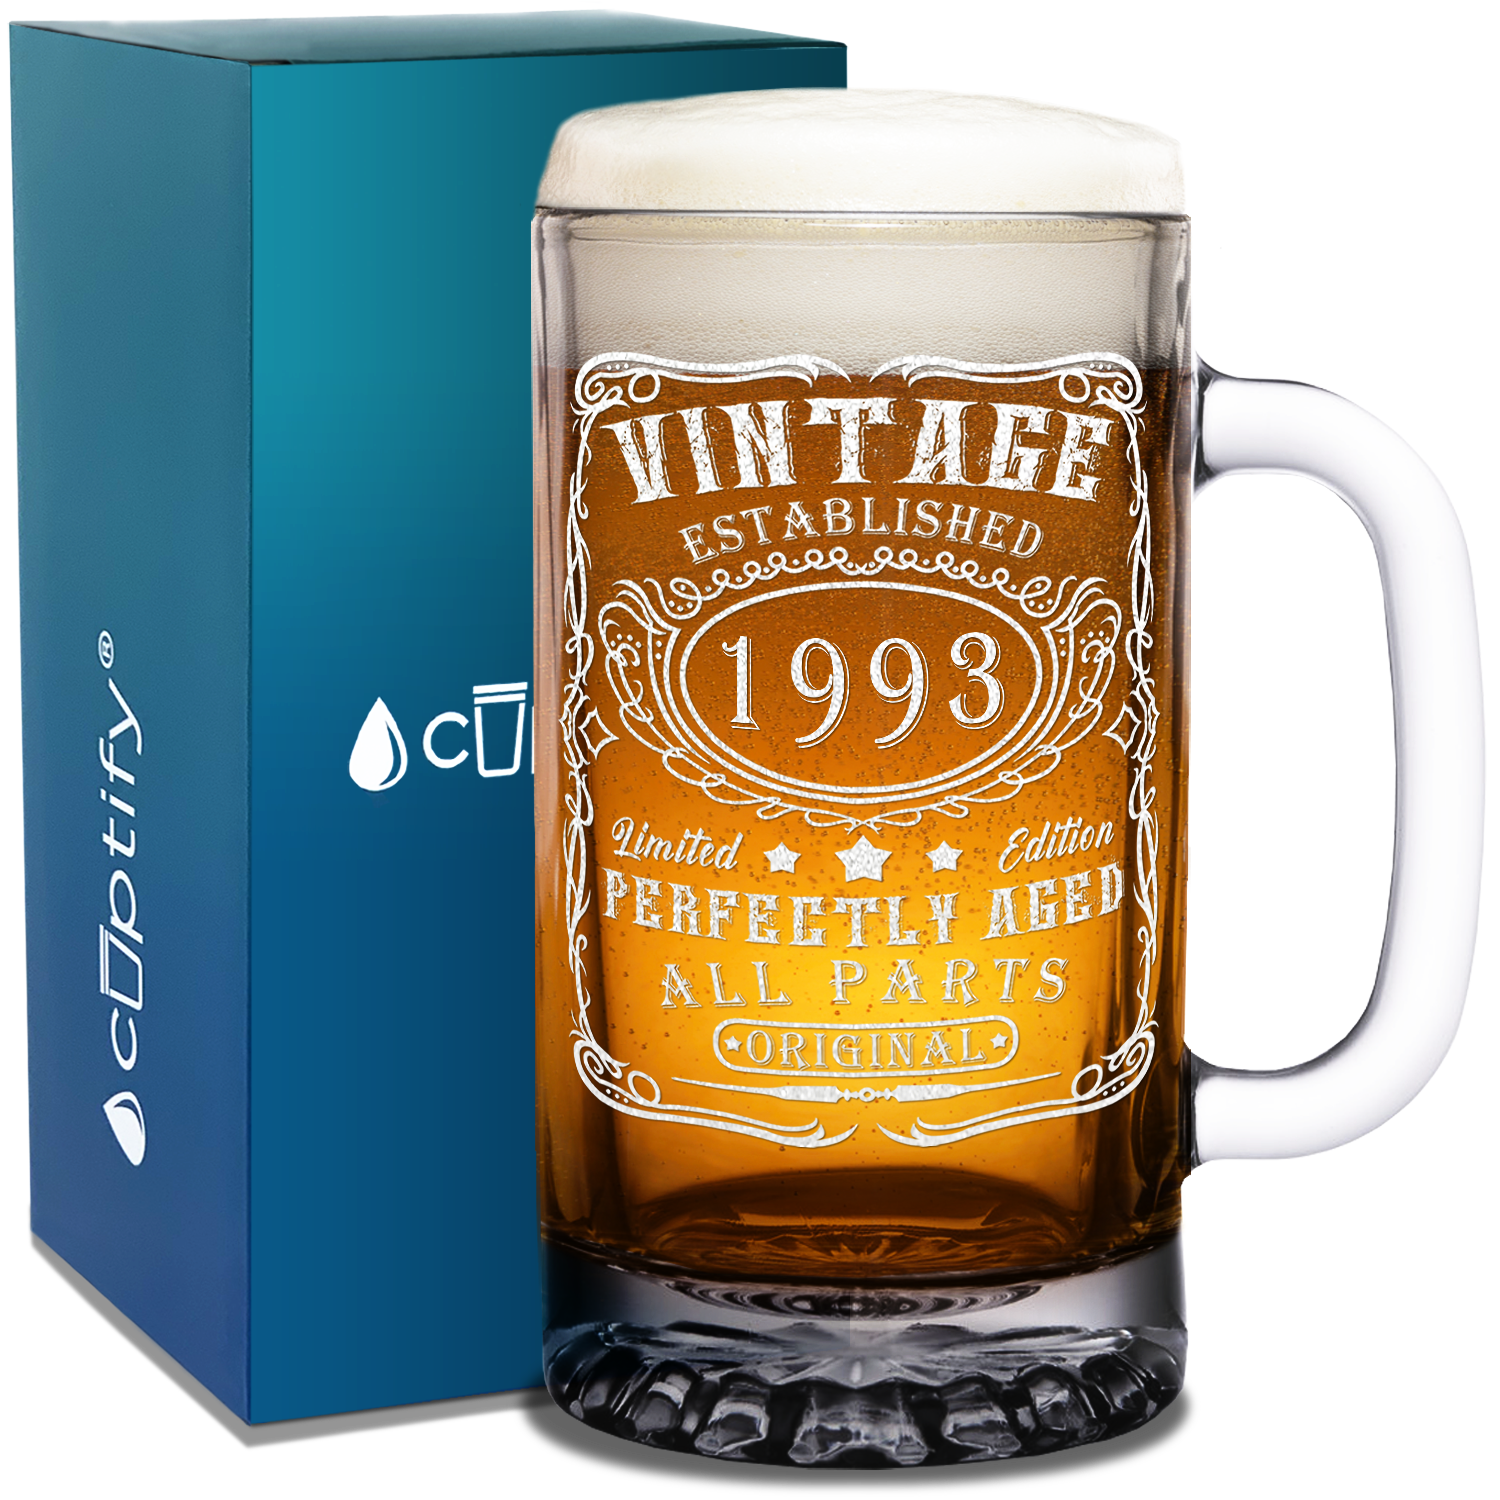 29th Birthday Gift Vintage Established 1993 Etched on 16oz Glass Mug